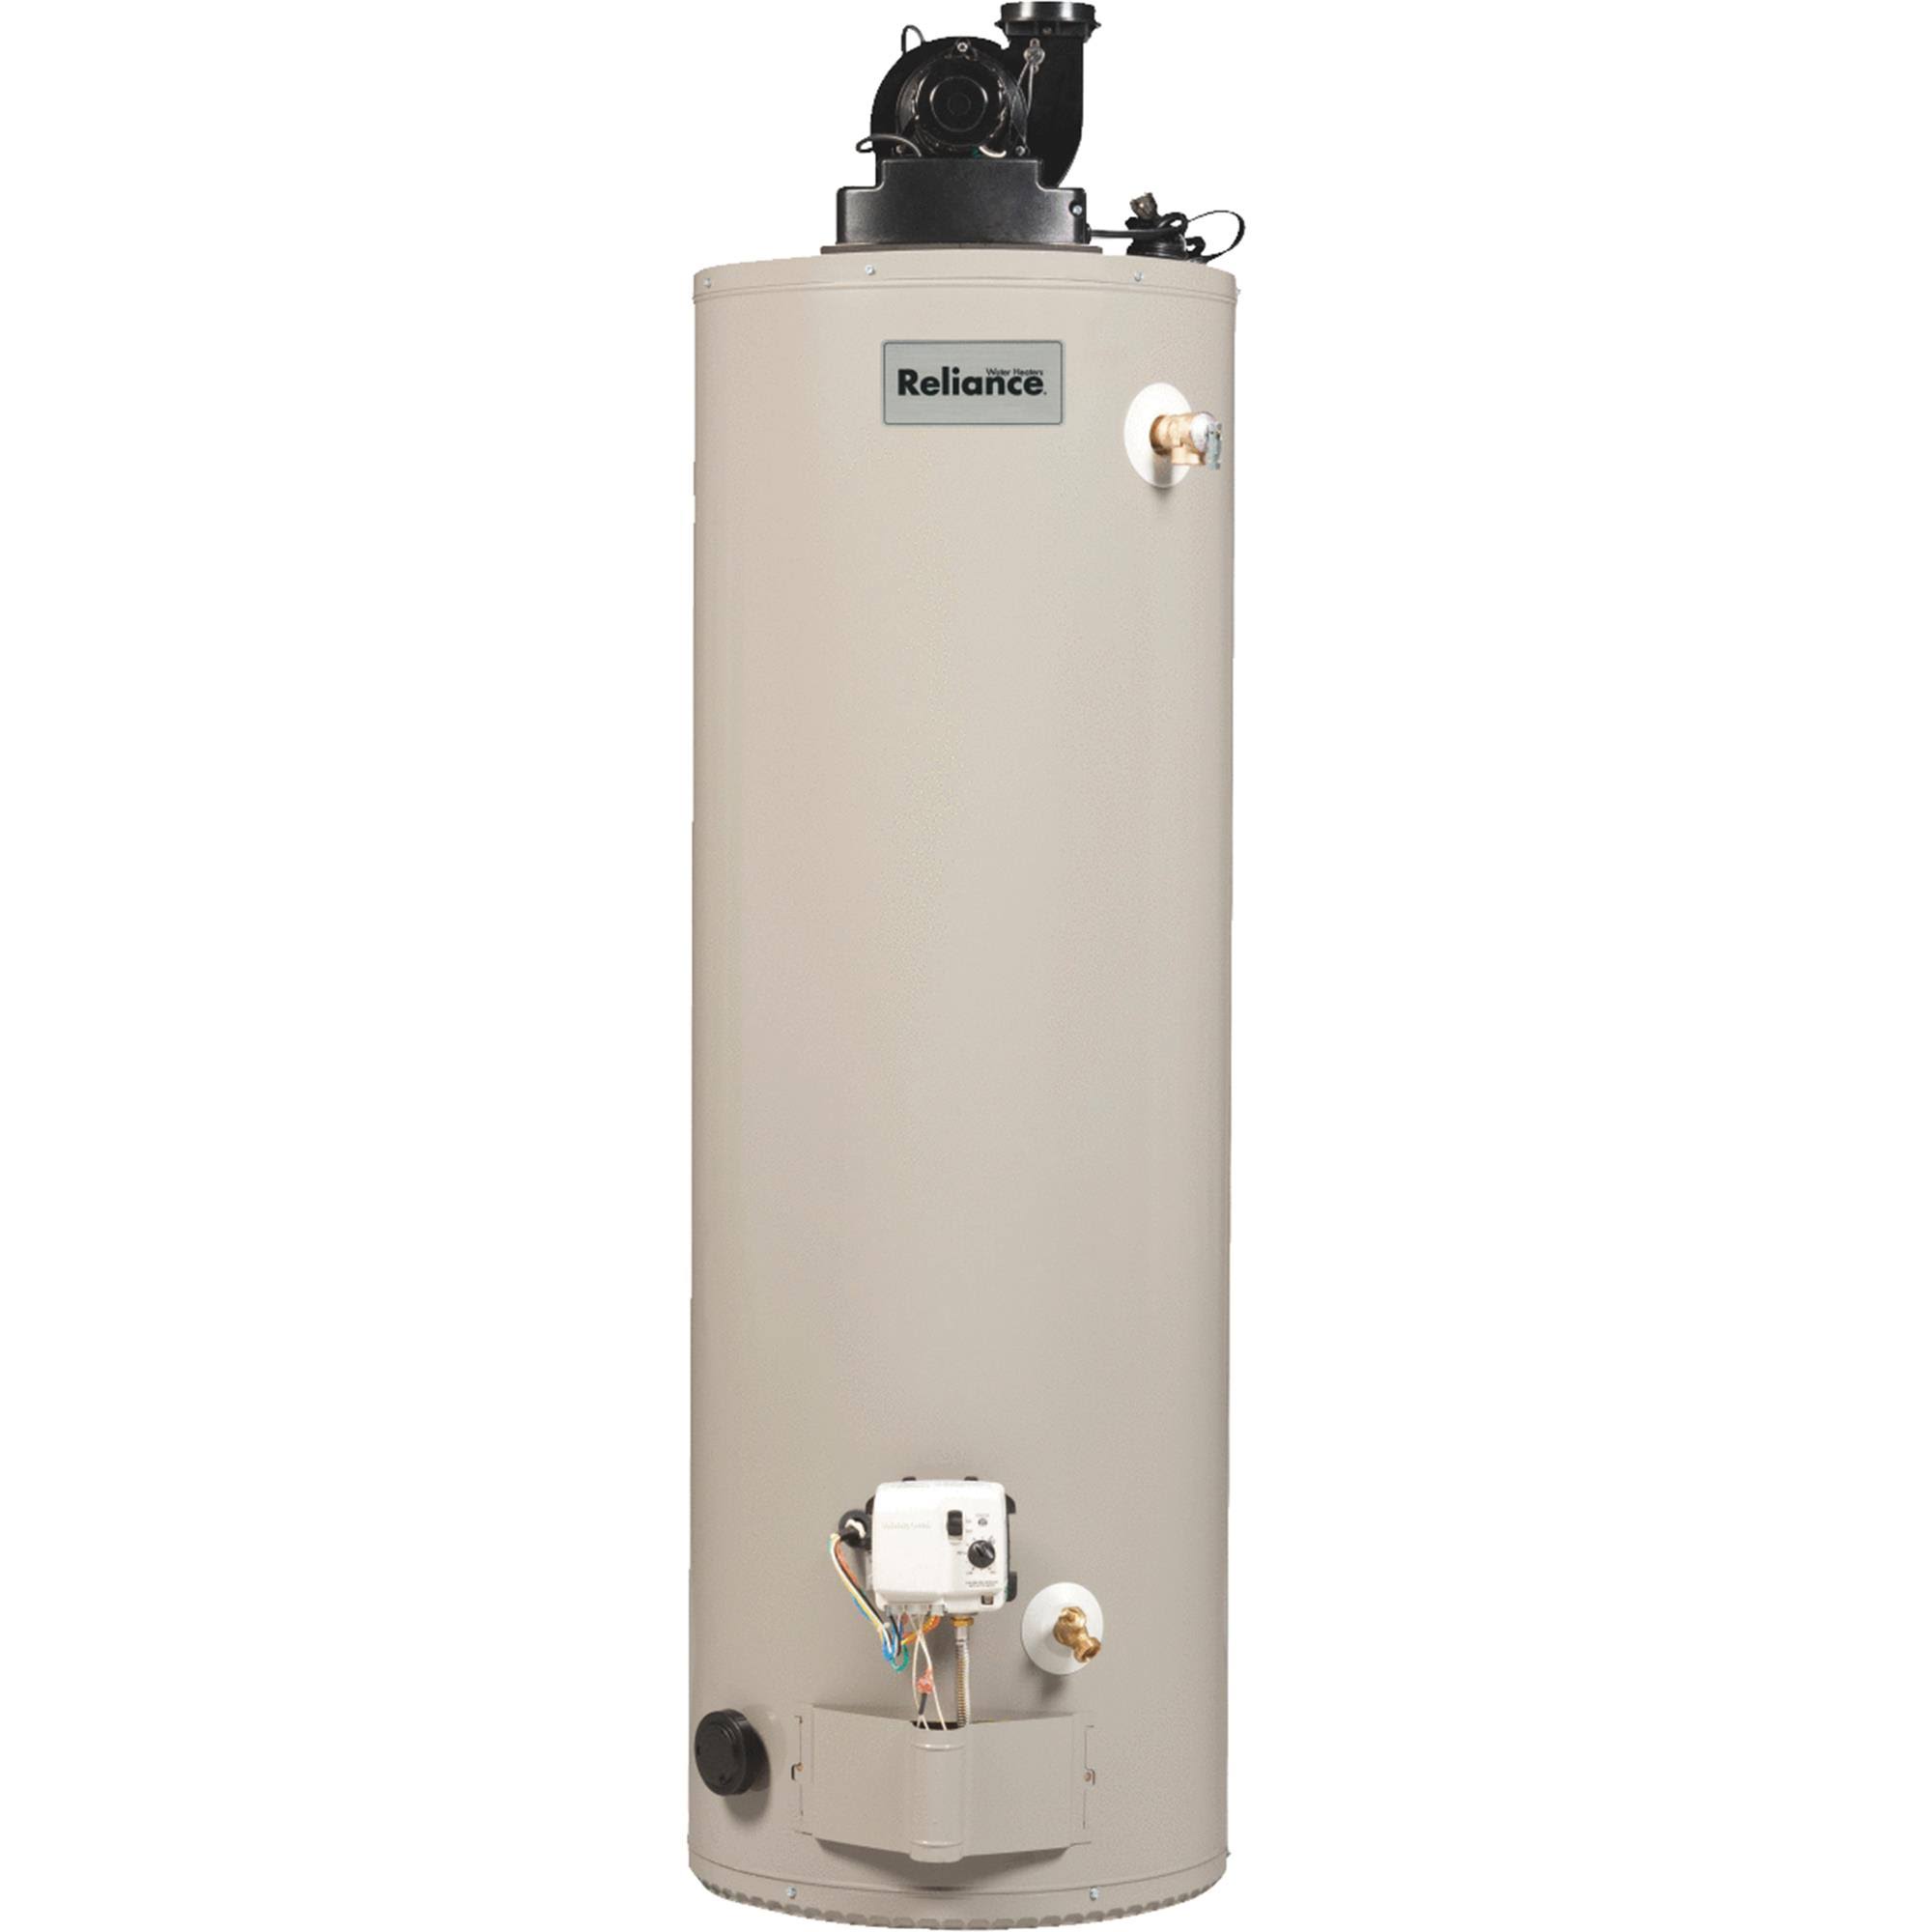 Reliance 6 50 HRVIT 50gal Liquid Propane GAS Water Heater with Power Vent